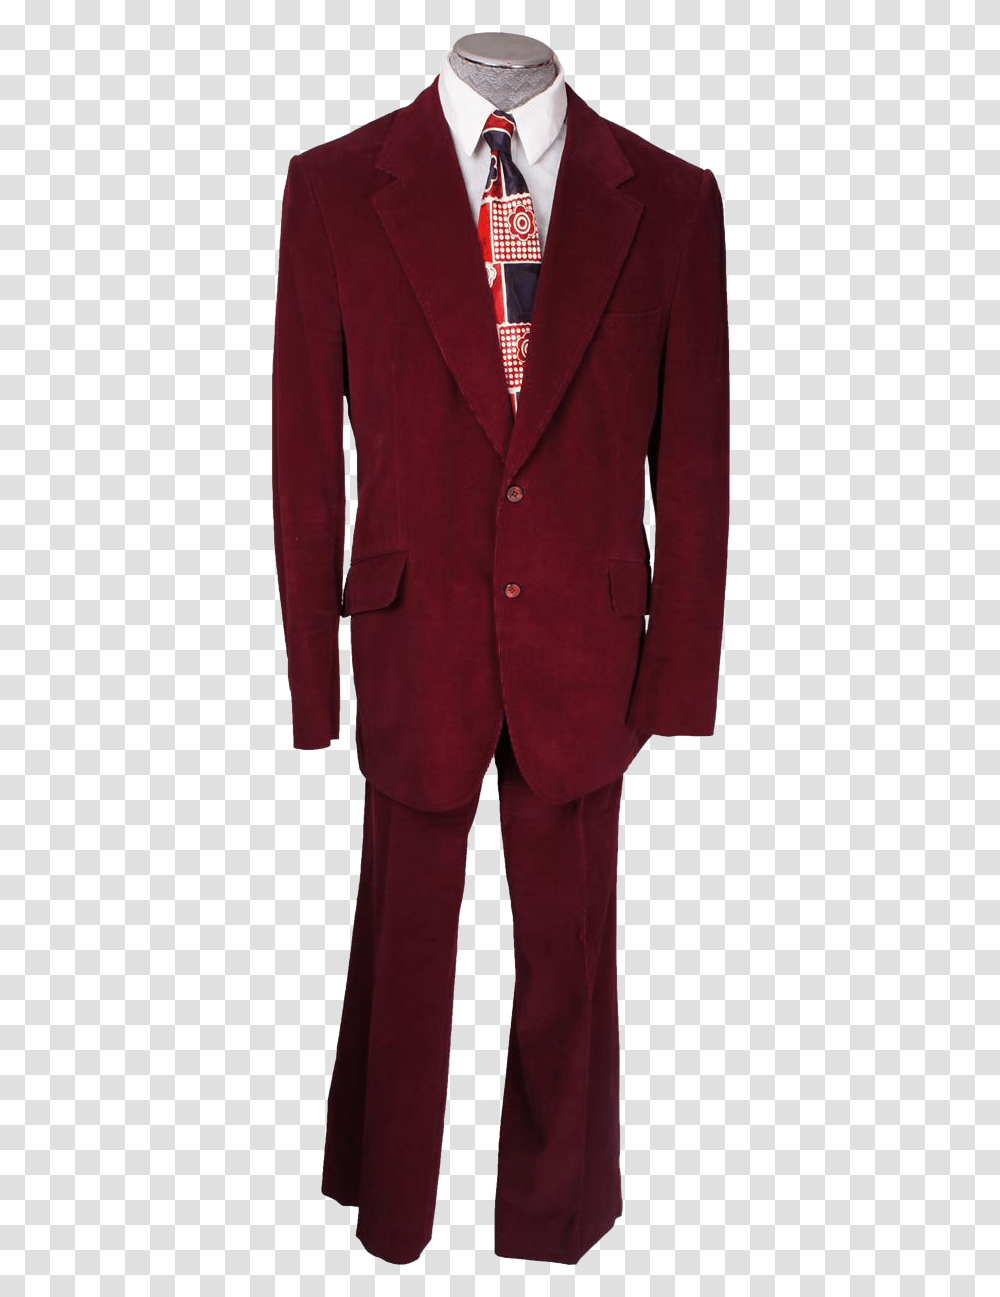 Red Suit Tuxedo, Apparel, Overcoat, Tie Transparent Png